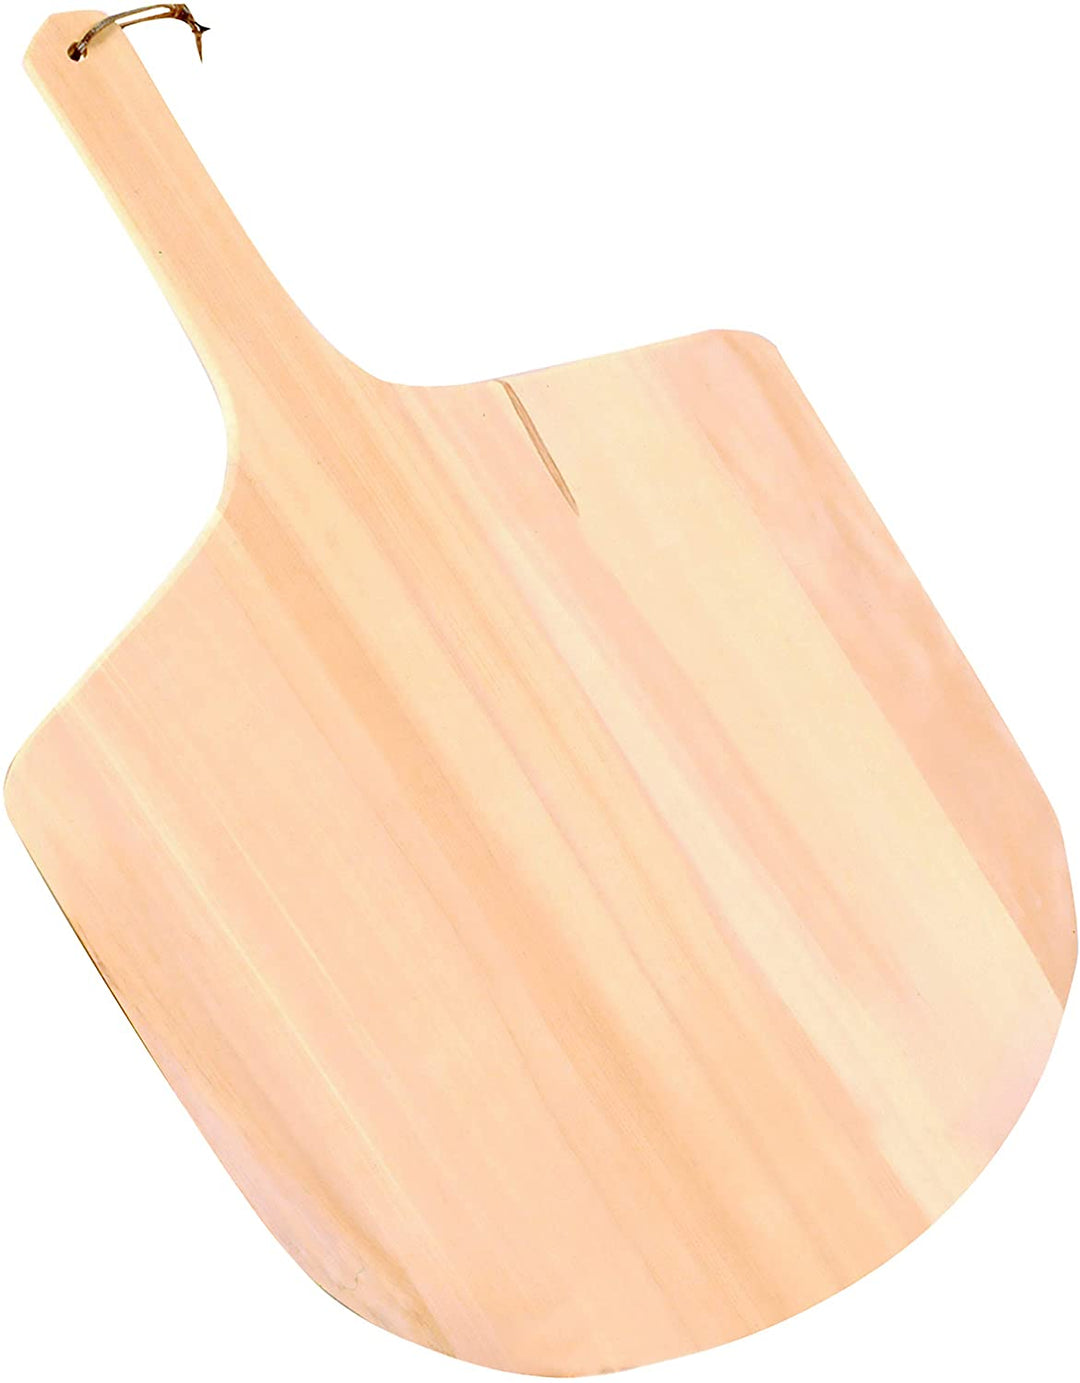 Norpro Norpro Wooden Pizza Peel / Paddle